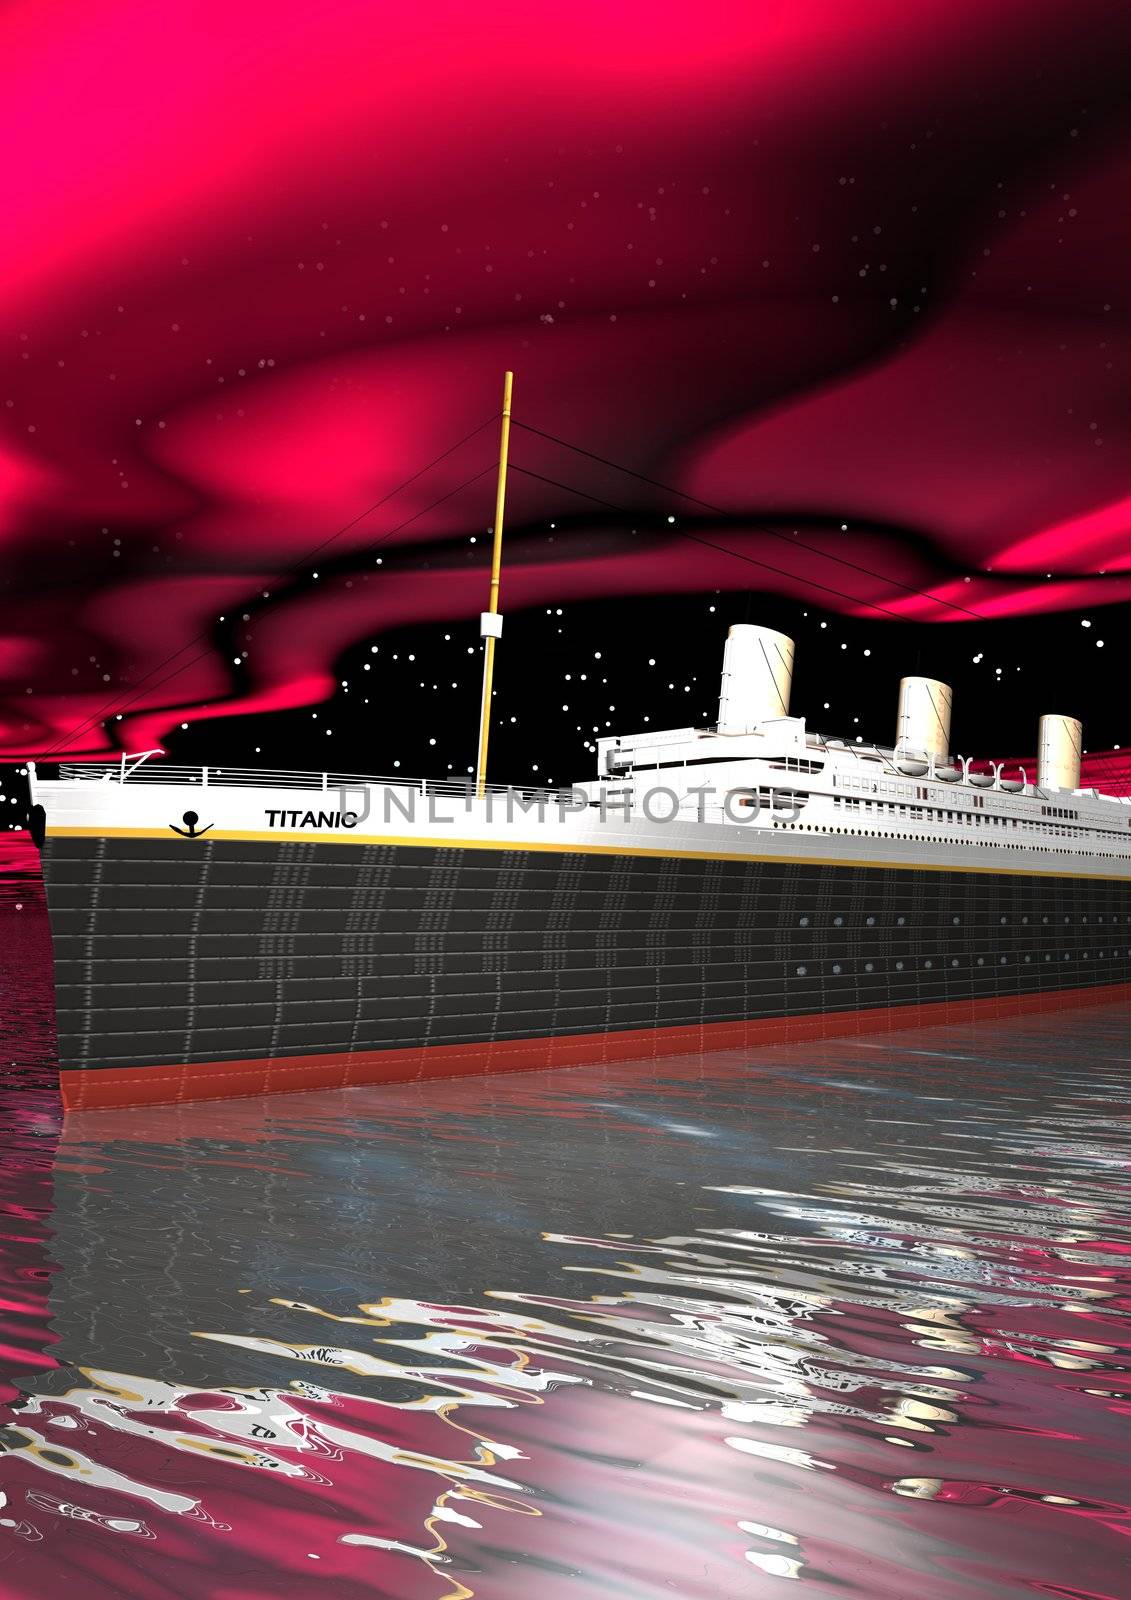 Titanic 1912 - 2012 and sky pink